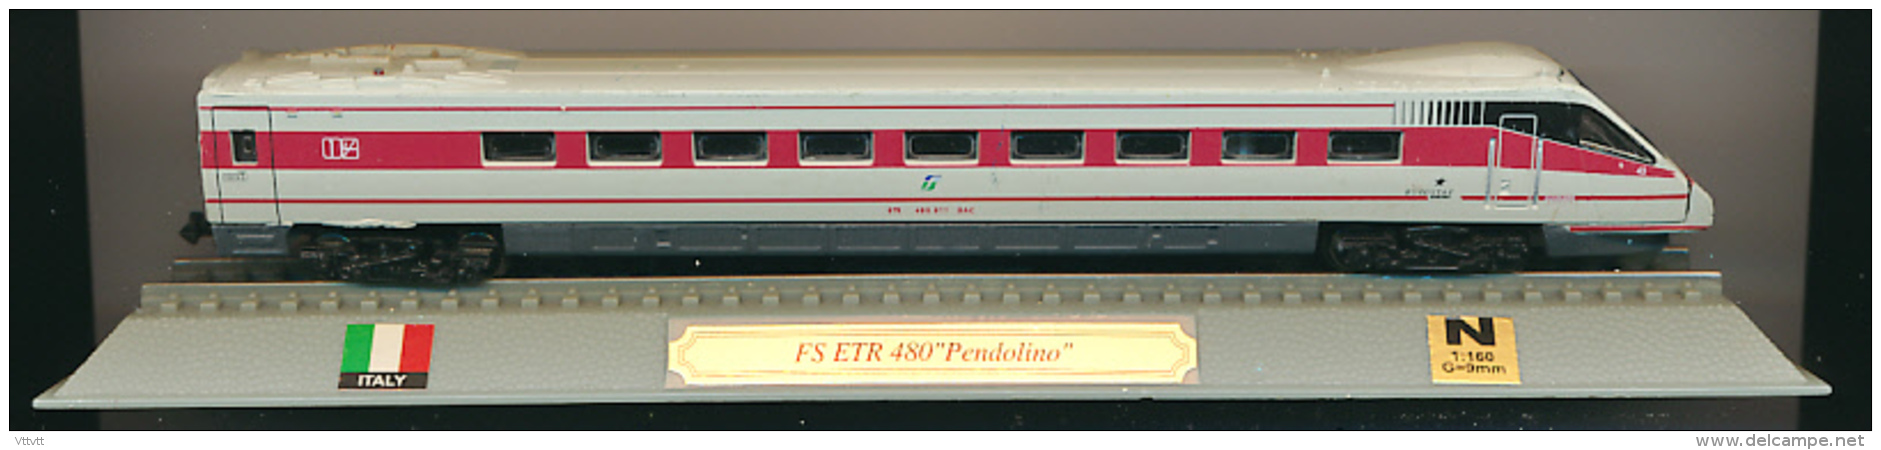 Locomotive : FS ETR 480 "Pendolino", Echelle N 1/160, G = 9 Mm, Italy, Italie - Locomotives